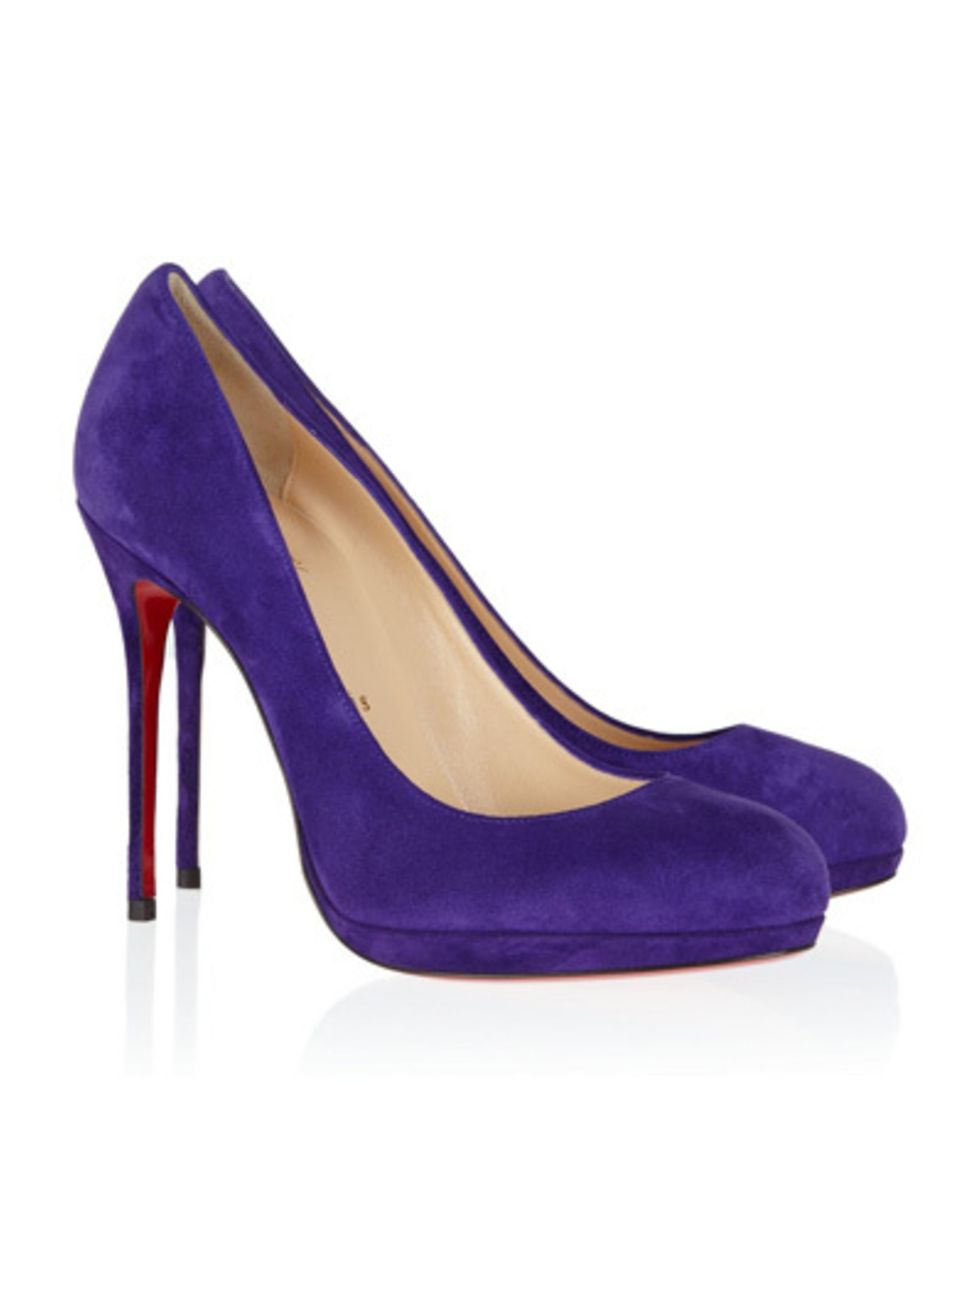 Footwear, High heels, Purple, Basic pump, Electric blue, Tan, Beige, Sandal, Court shoe, Fashion design, 